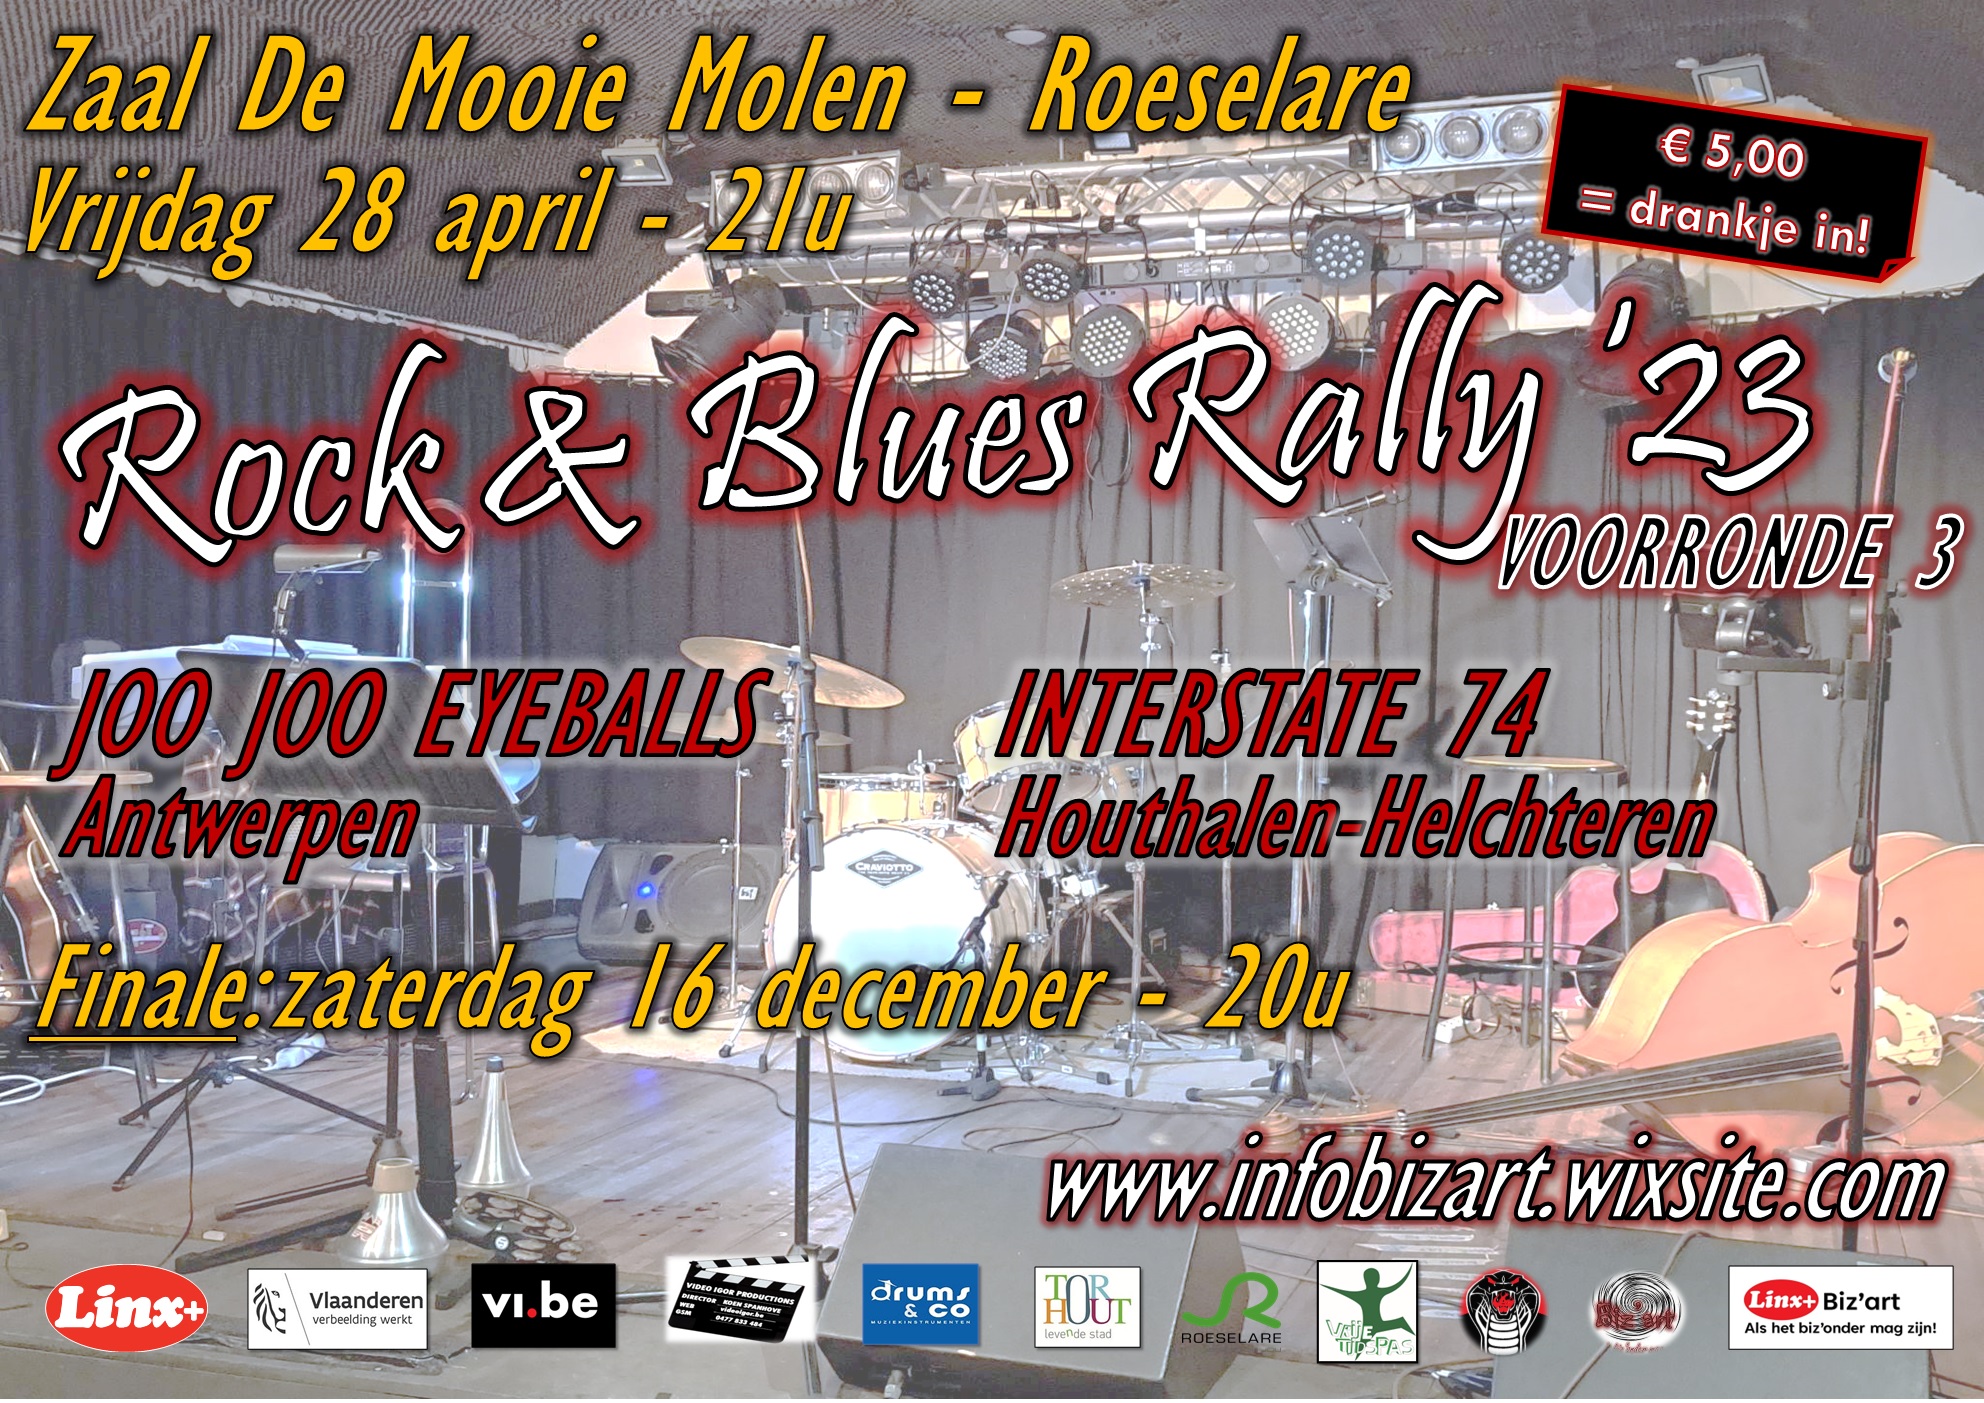 Voorronde 3 Rock & Blues Rally